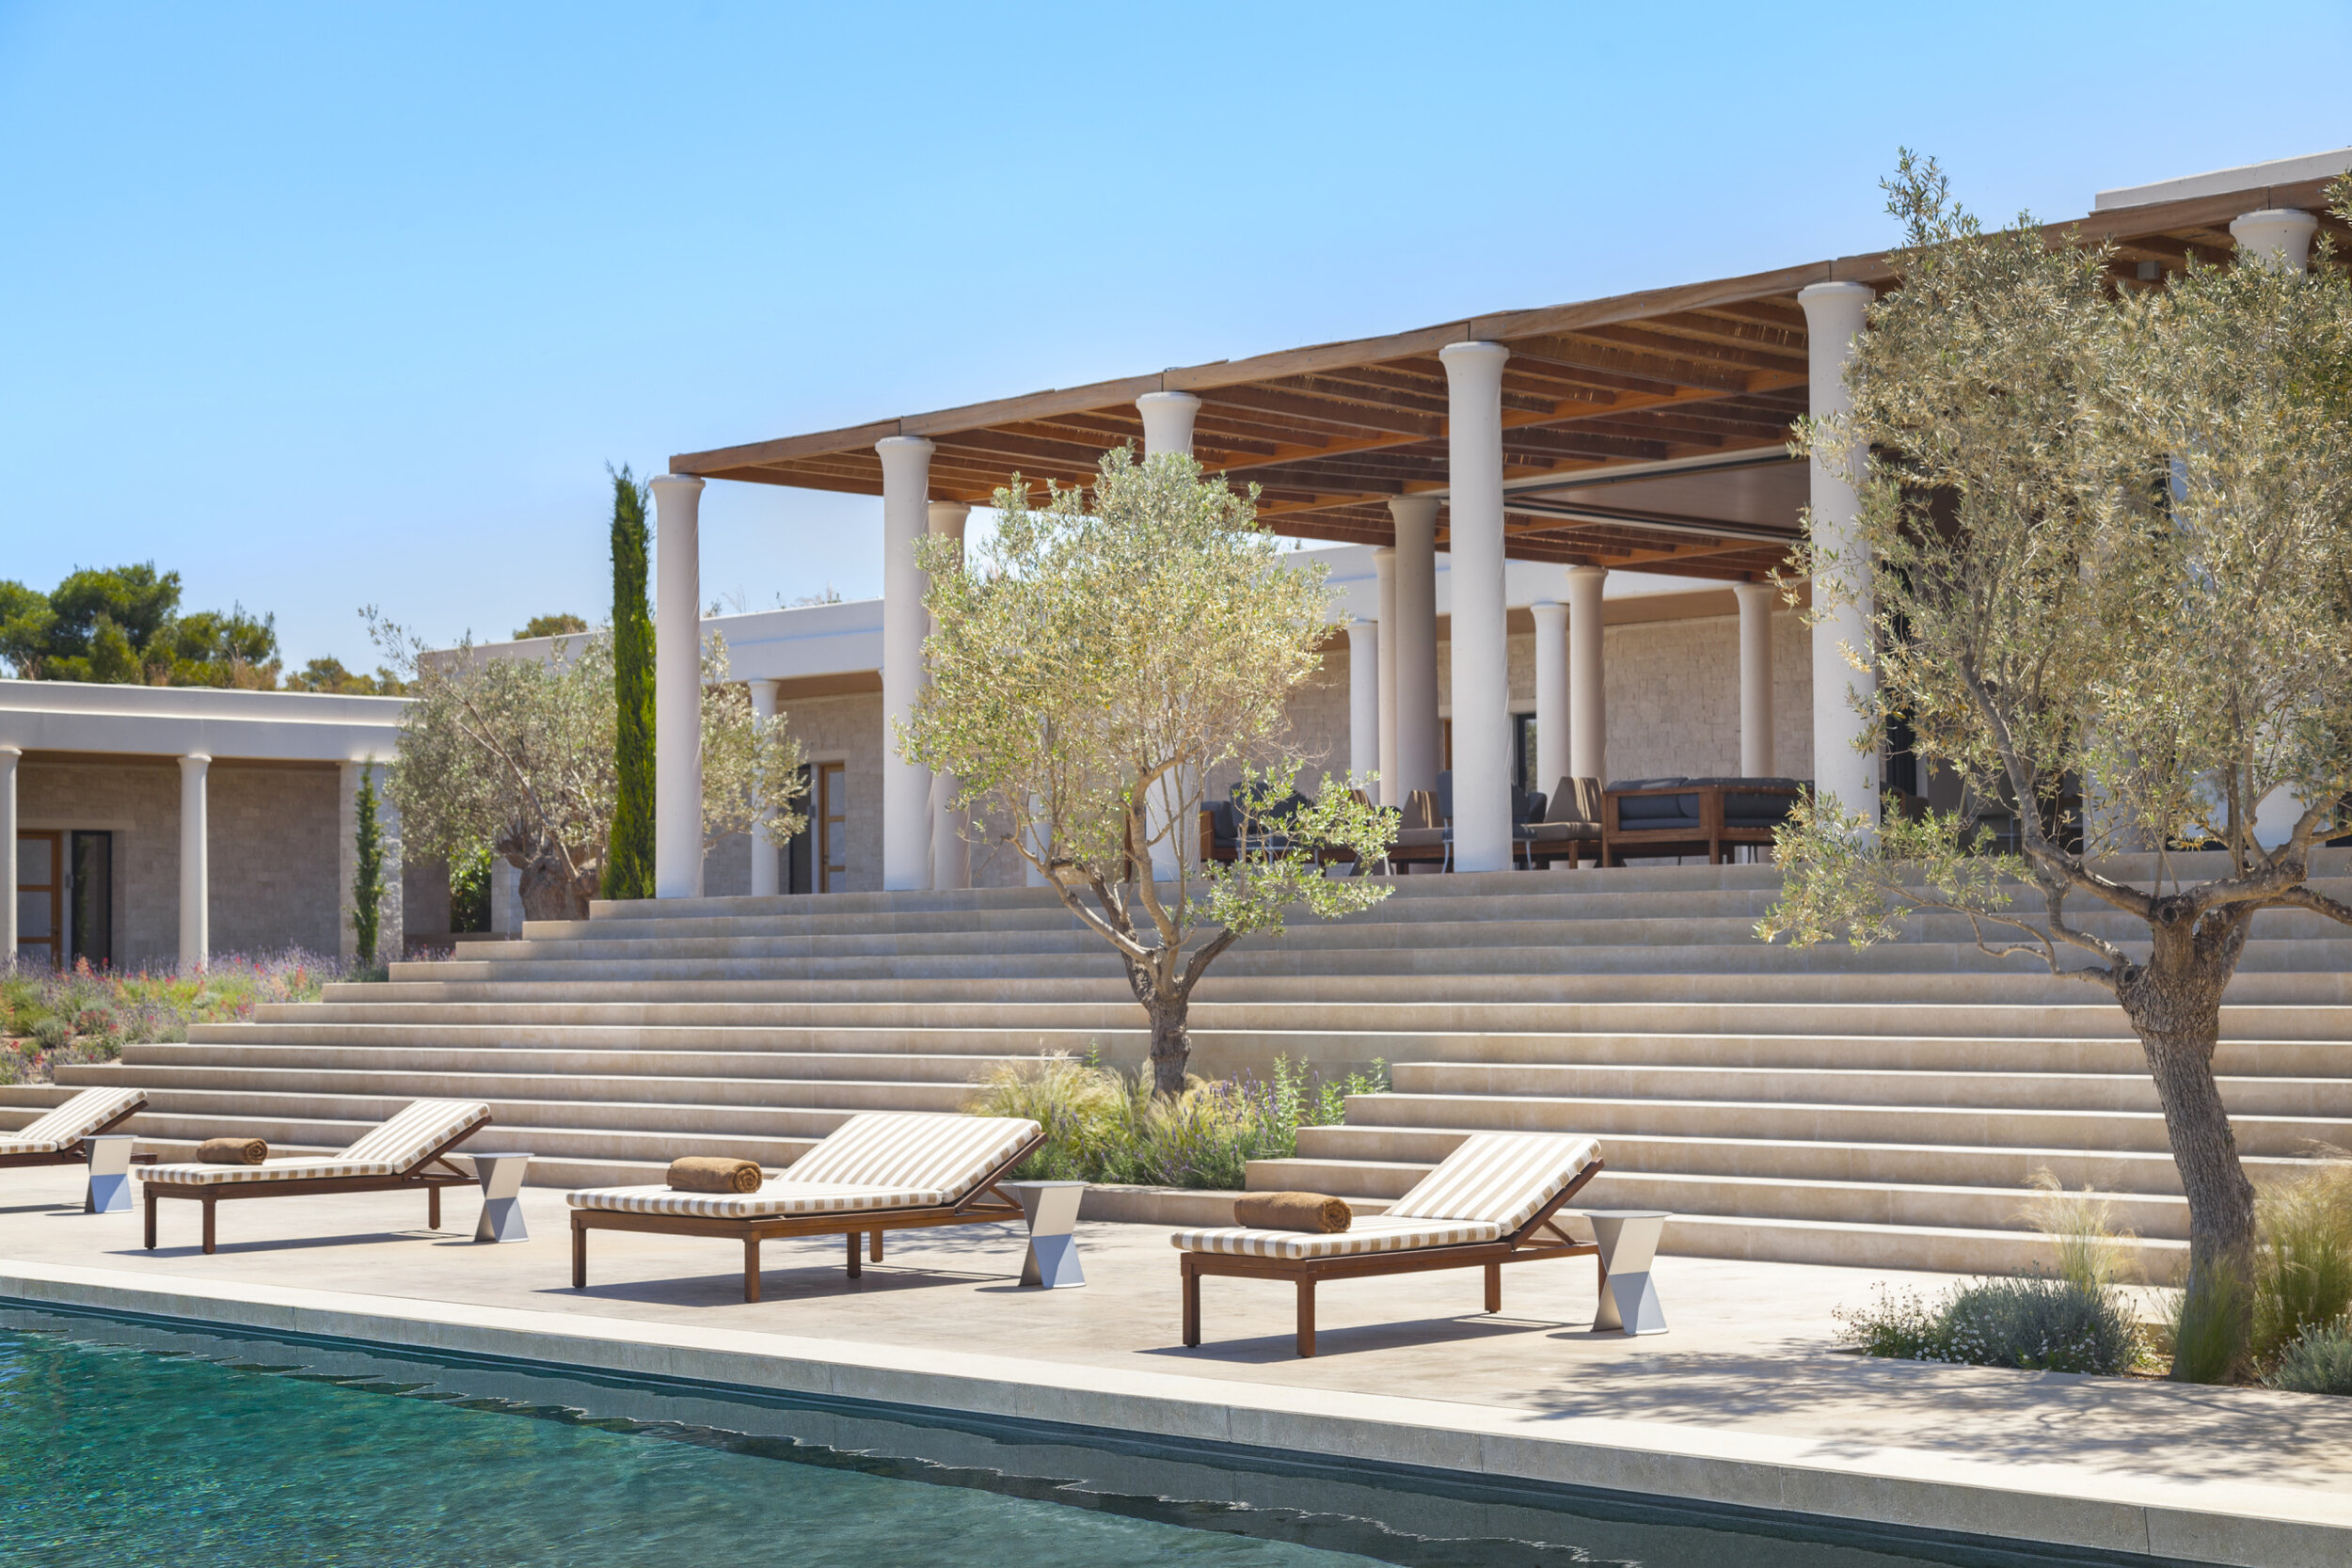 Amanzoe, Greece - Accommodation, Villas, Six bedroom villa, Terrace, Swimming pool, View_High Res_6768.jpg